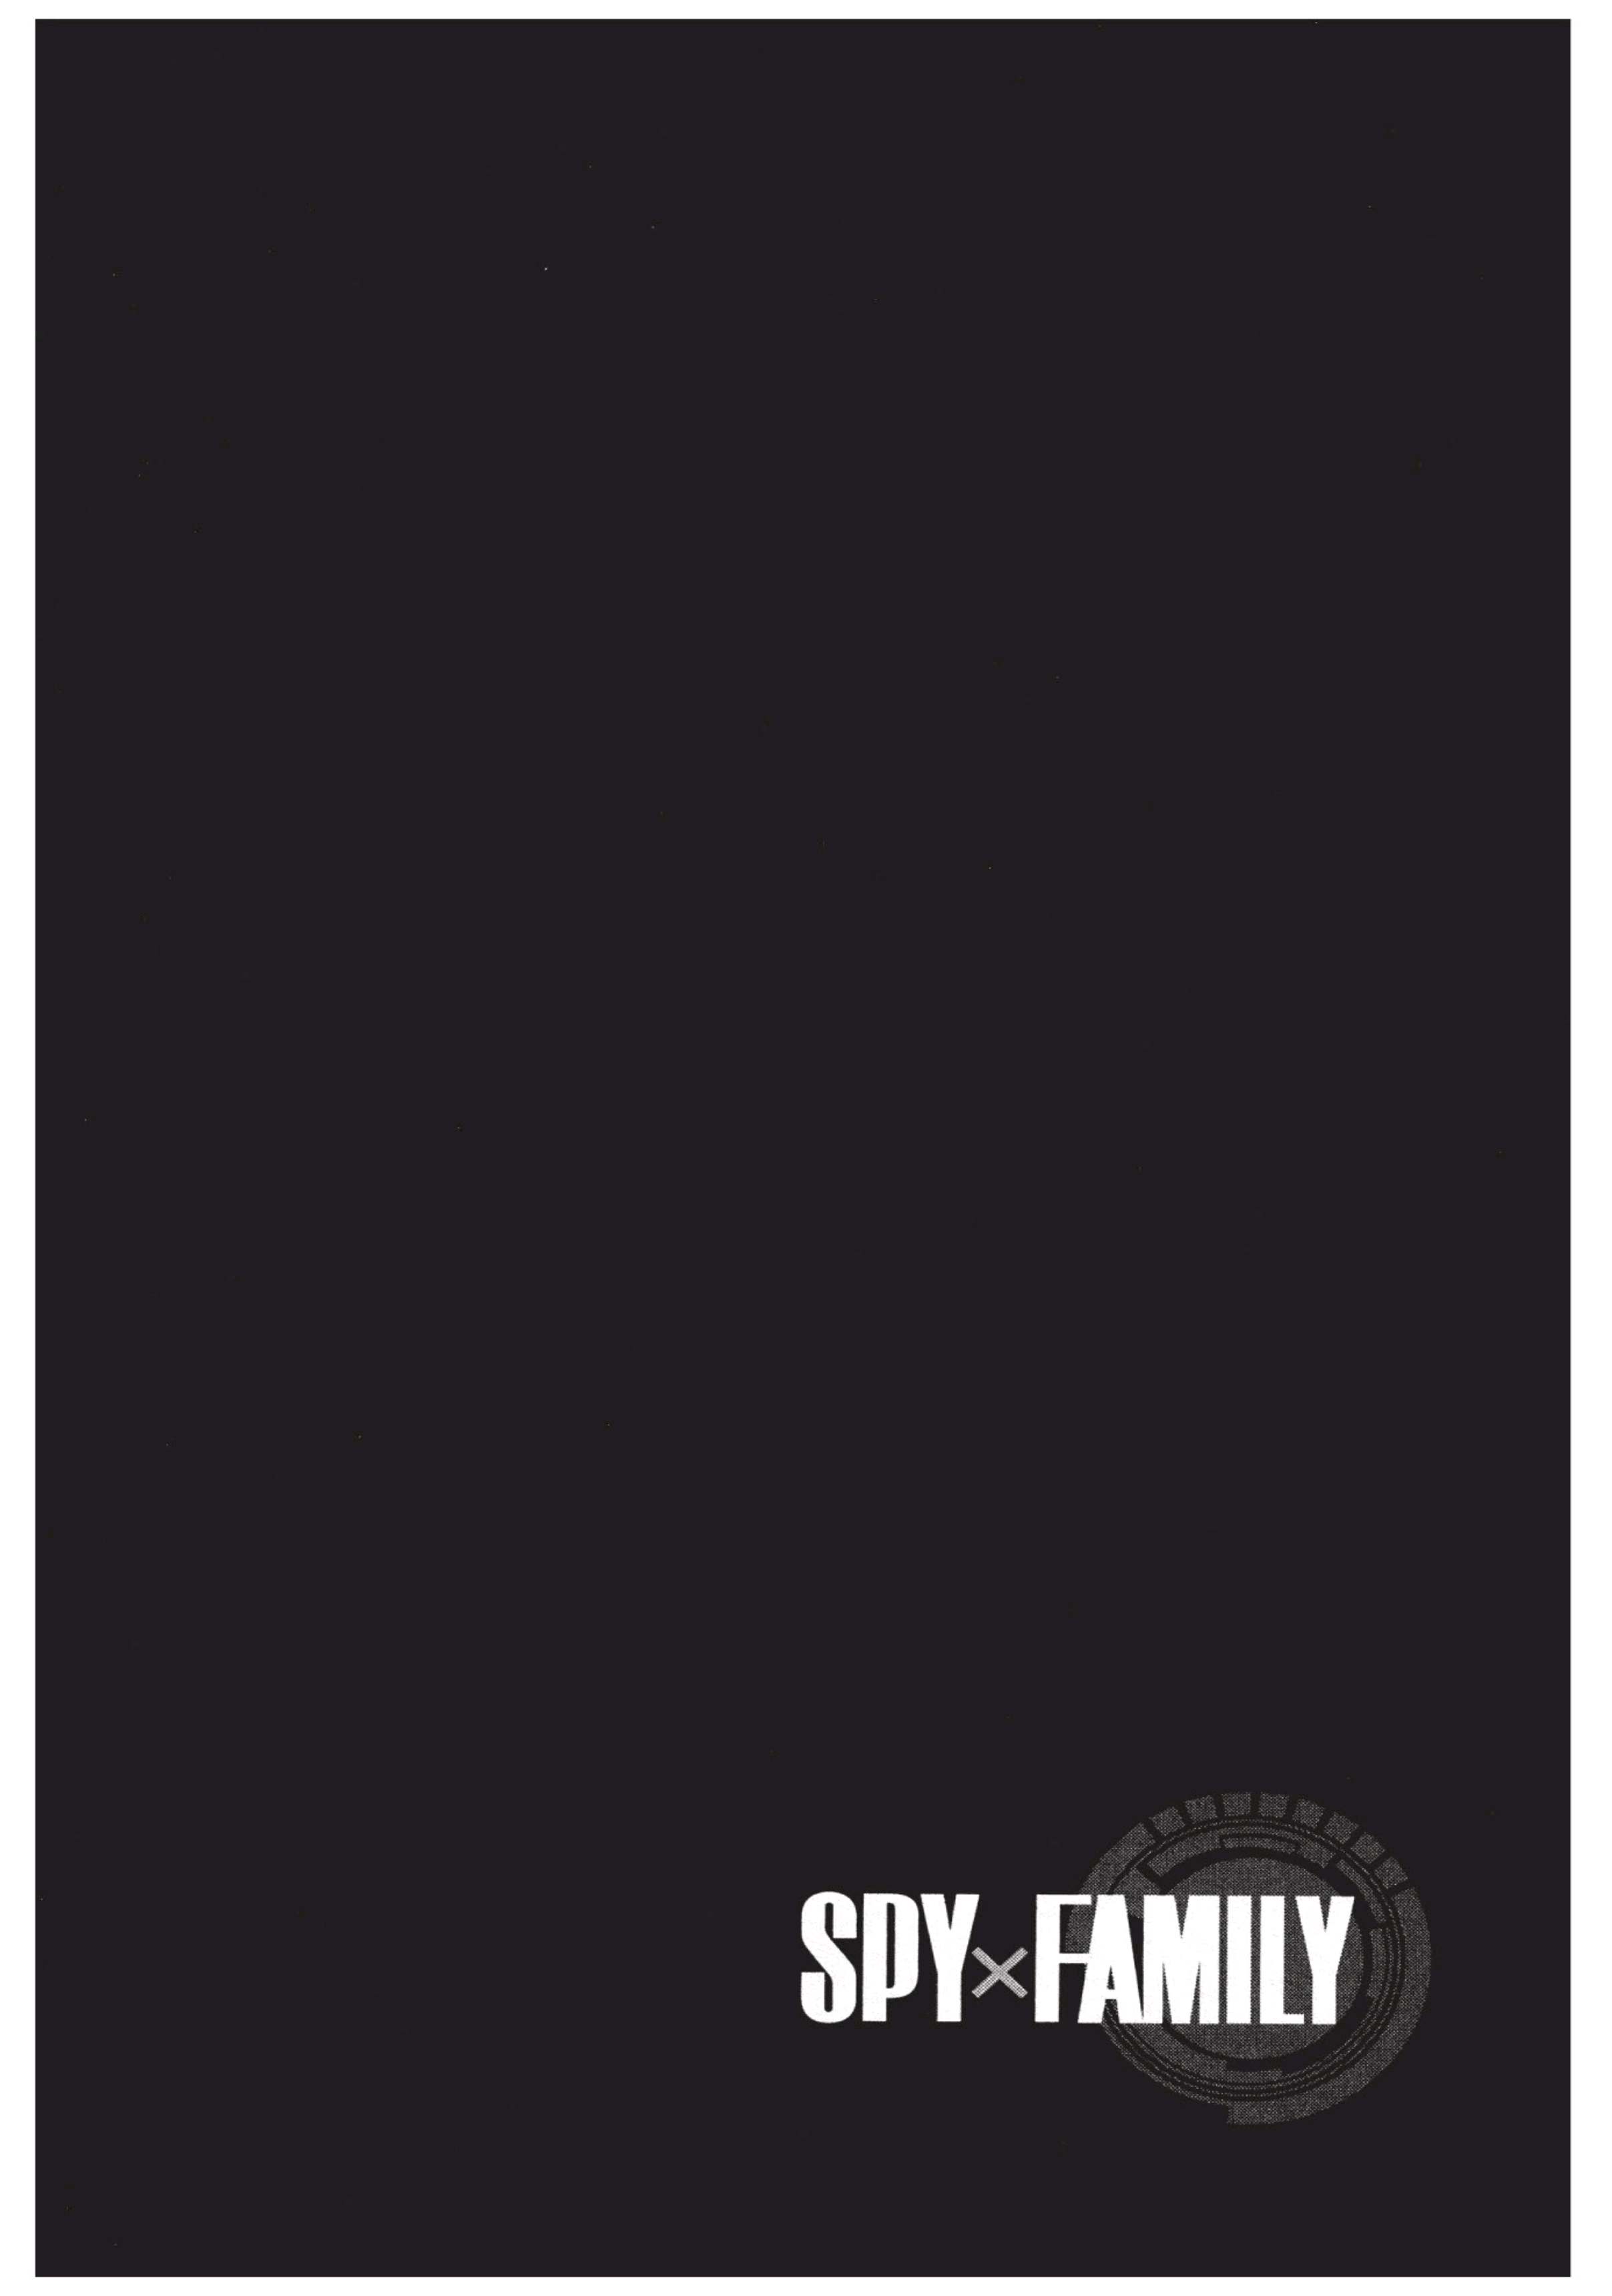 SPY X FAMILY 9 24